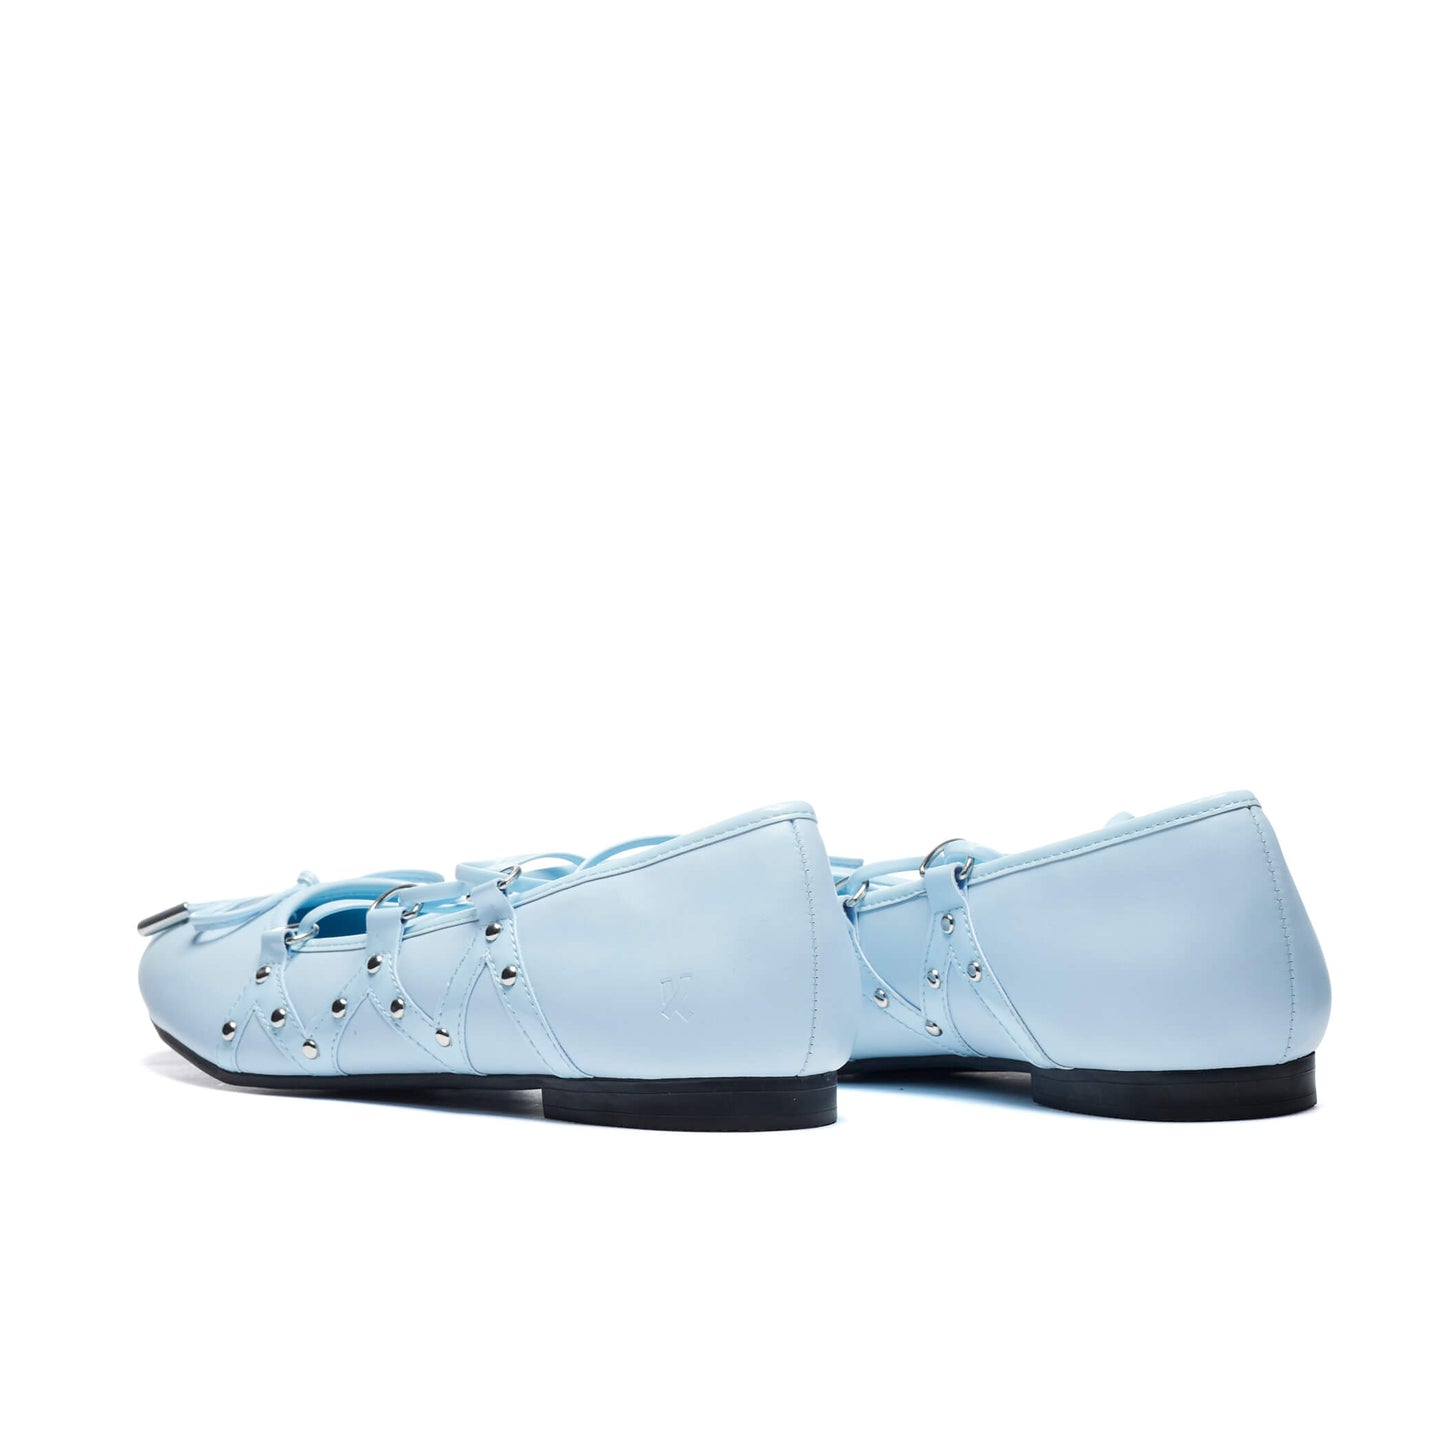 Violetta Lace Up Flat Ballet Shoes - Blue - Koi Footwear - Back View